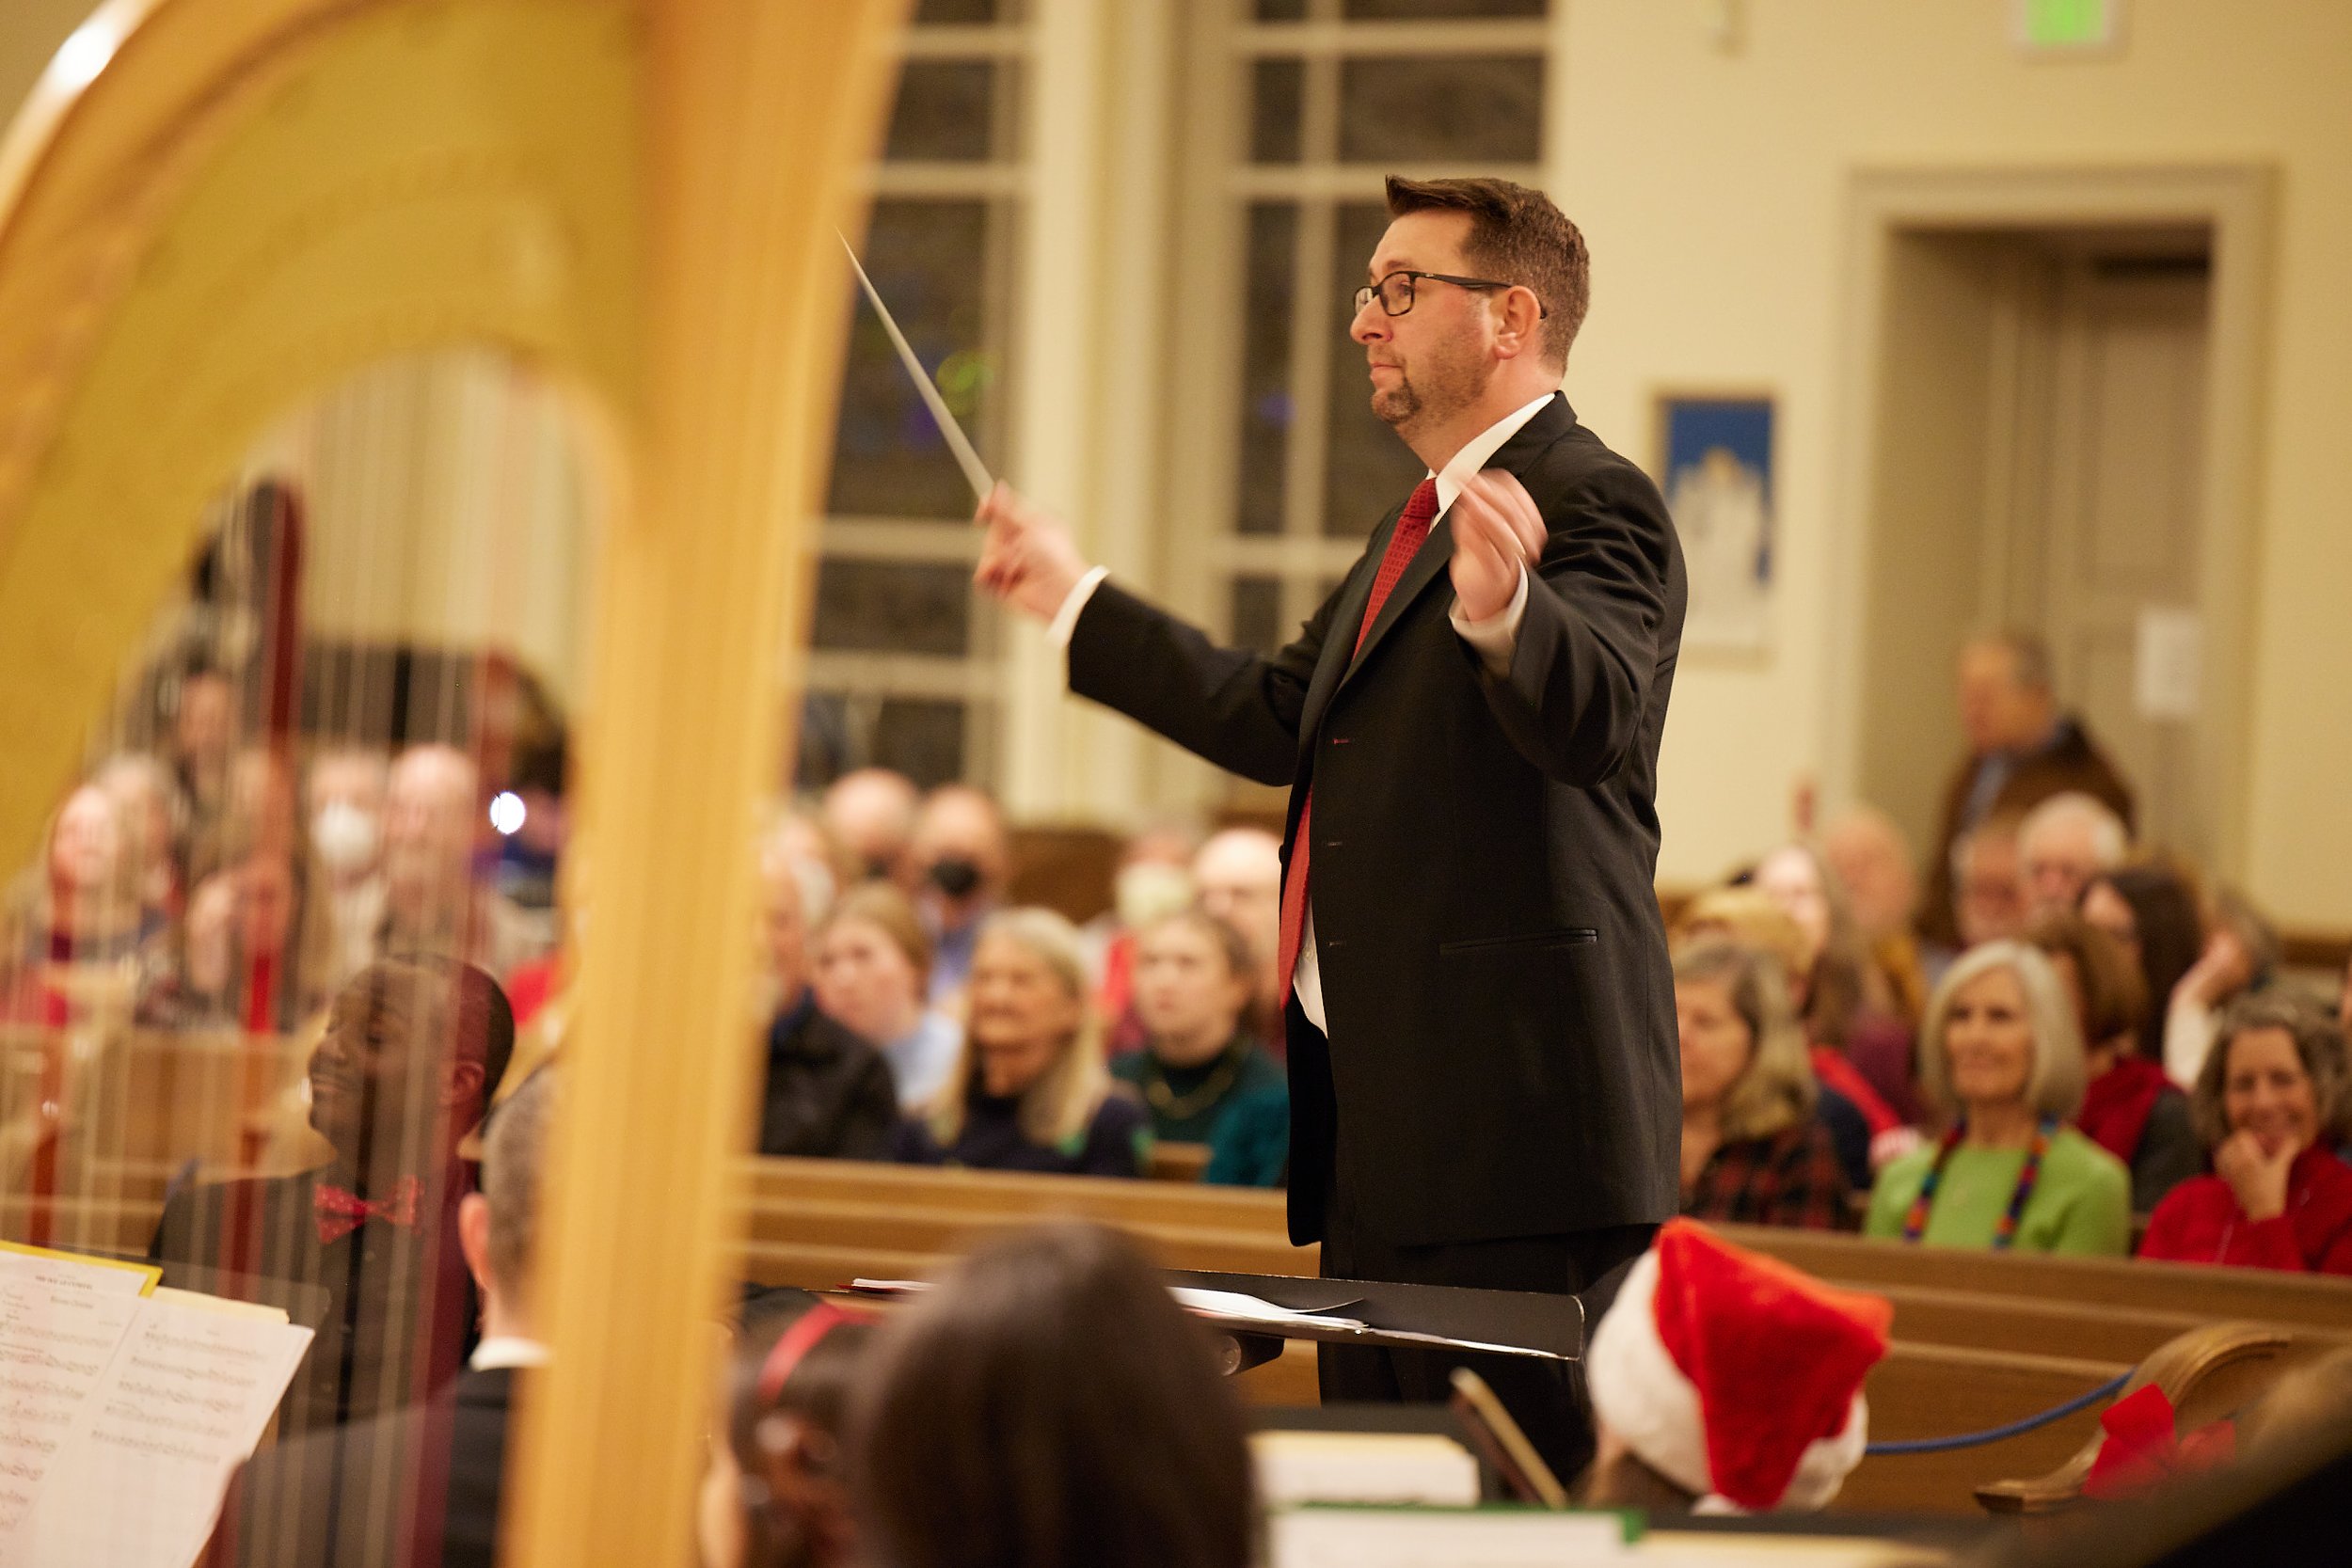 Paul Heinemann conducts the children's choir.